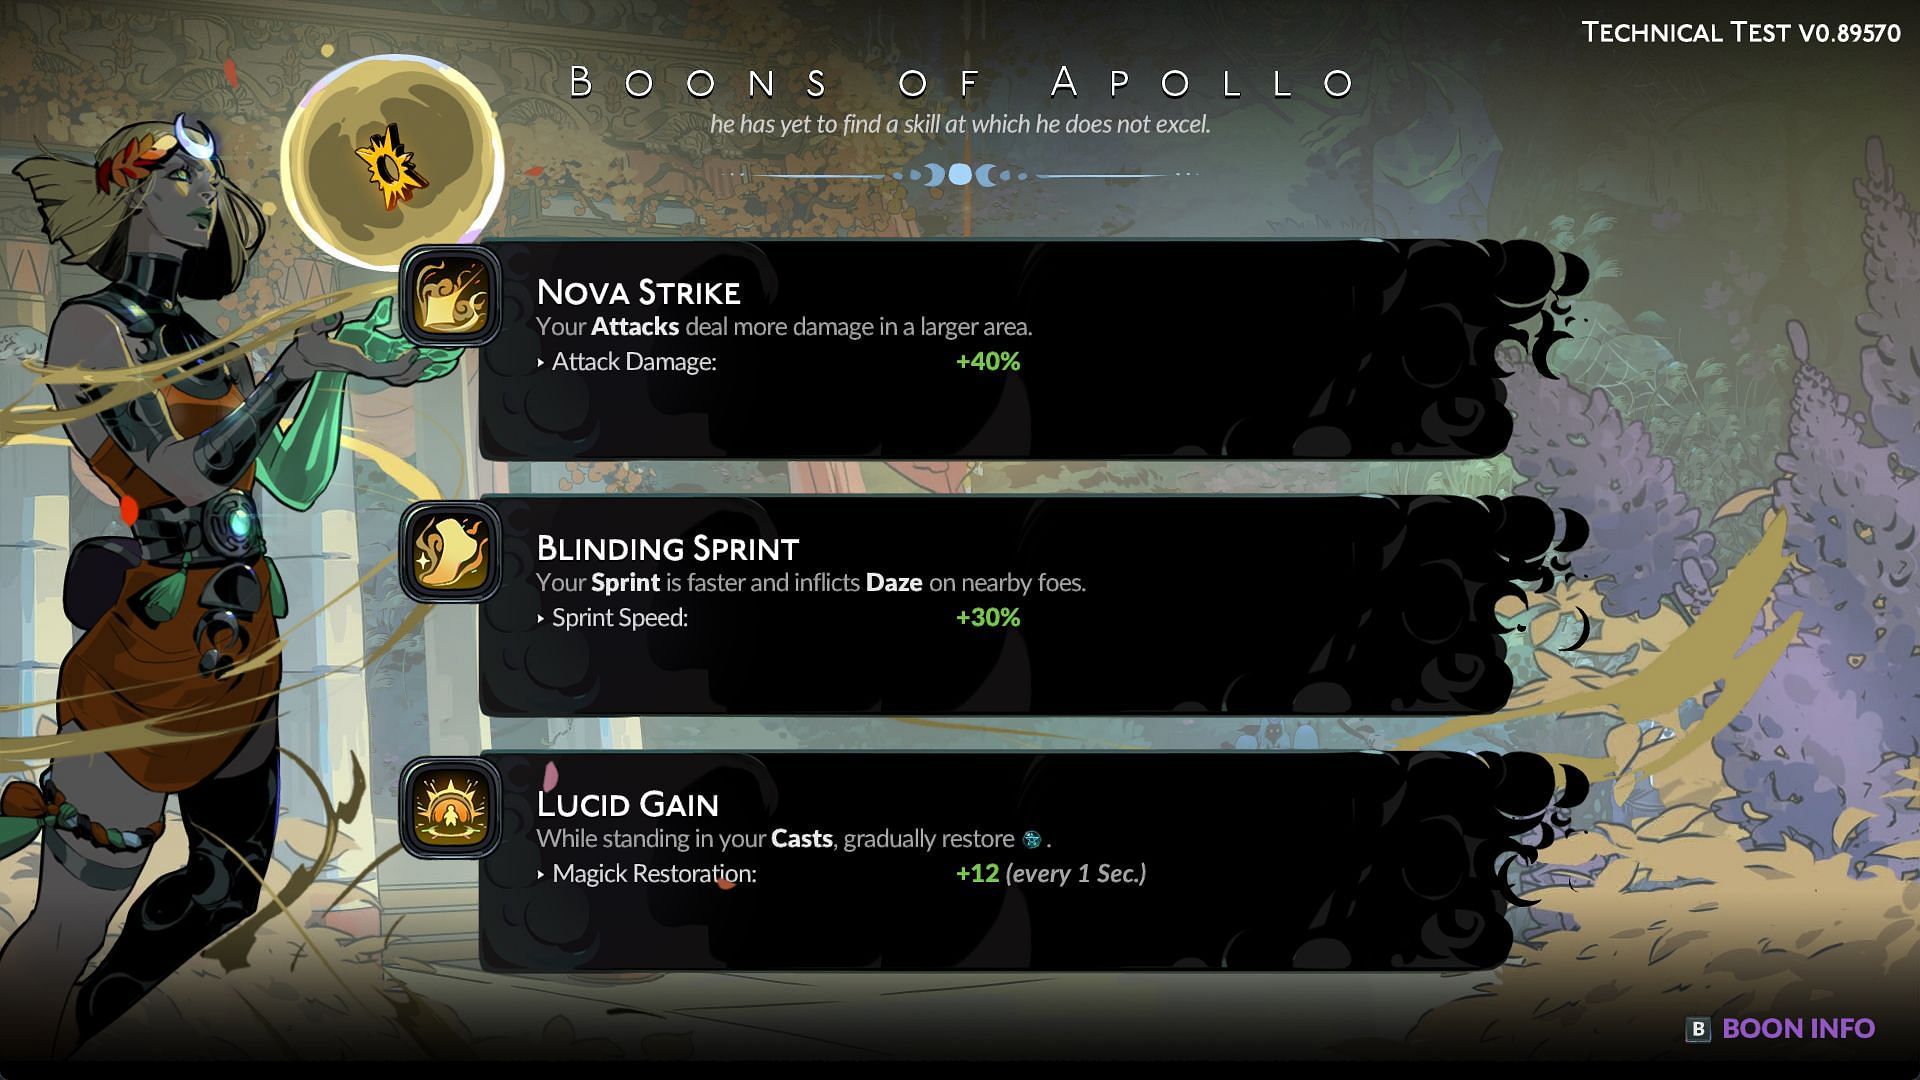 The Boon of Apollo improves Sprint (Image via Supergiant Games)